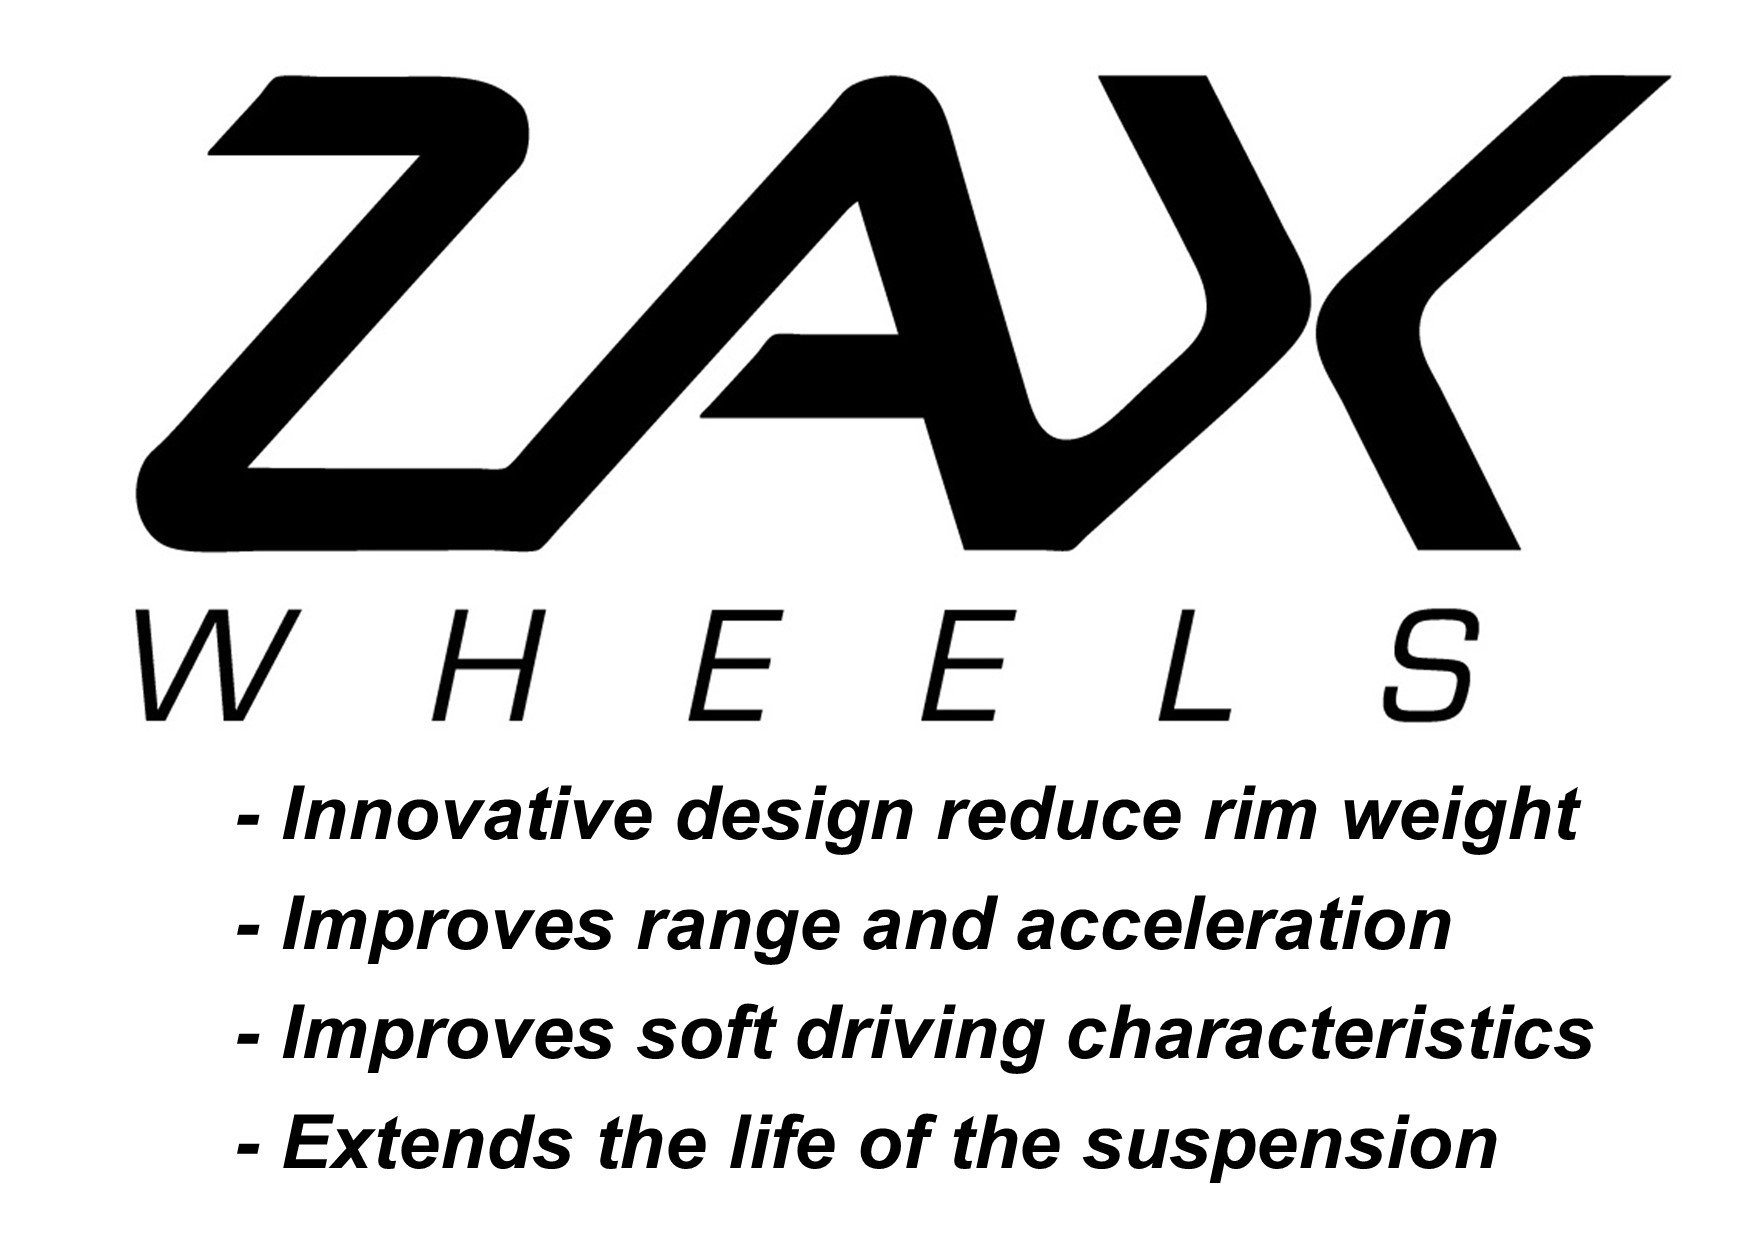 tesla-model-3-performance-zax-wheels